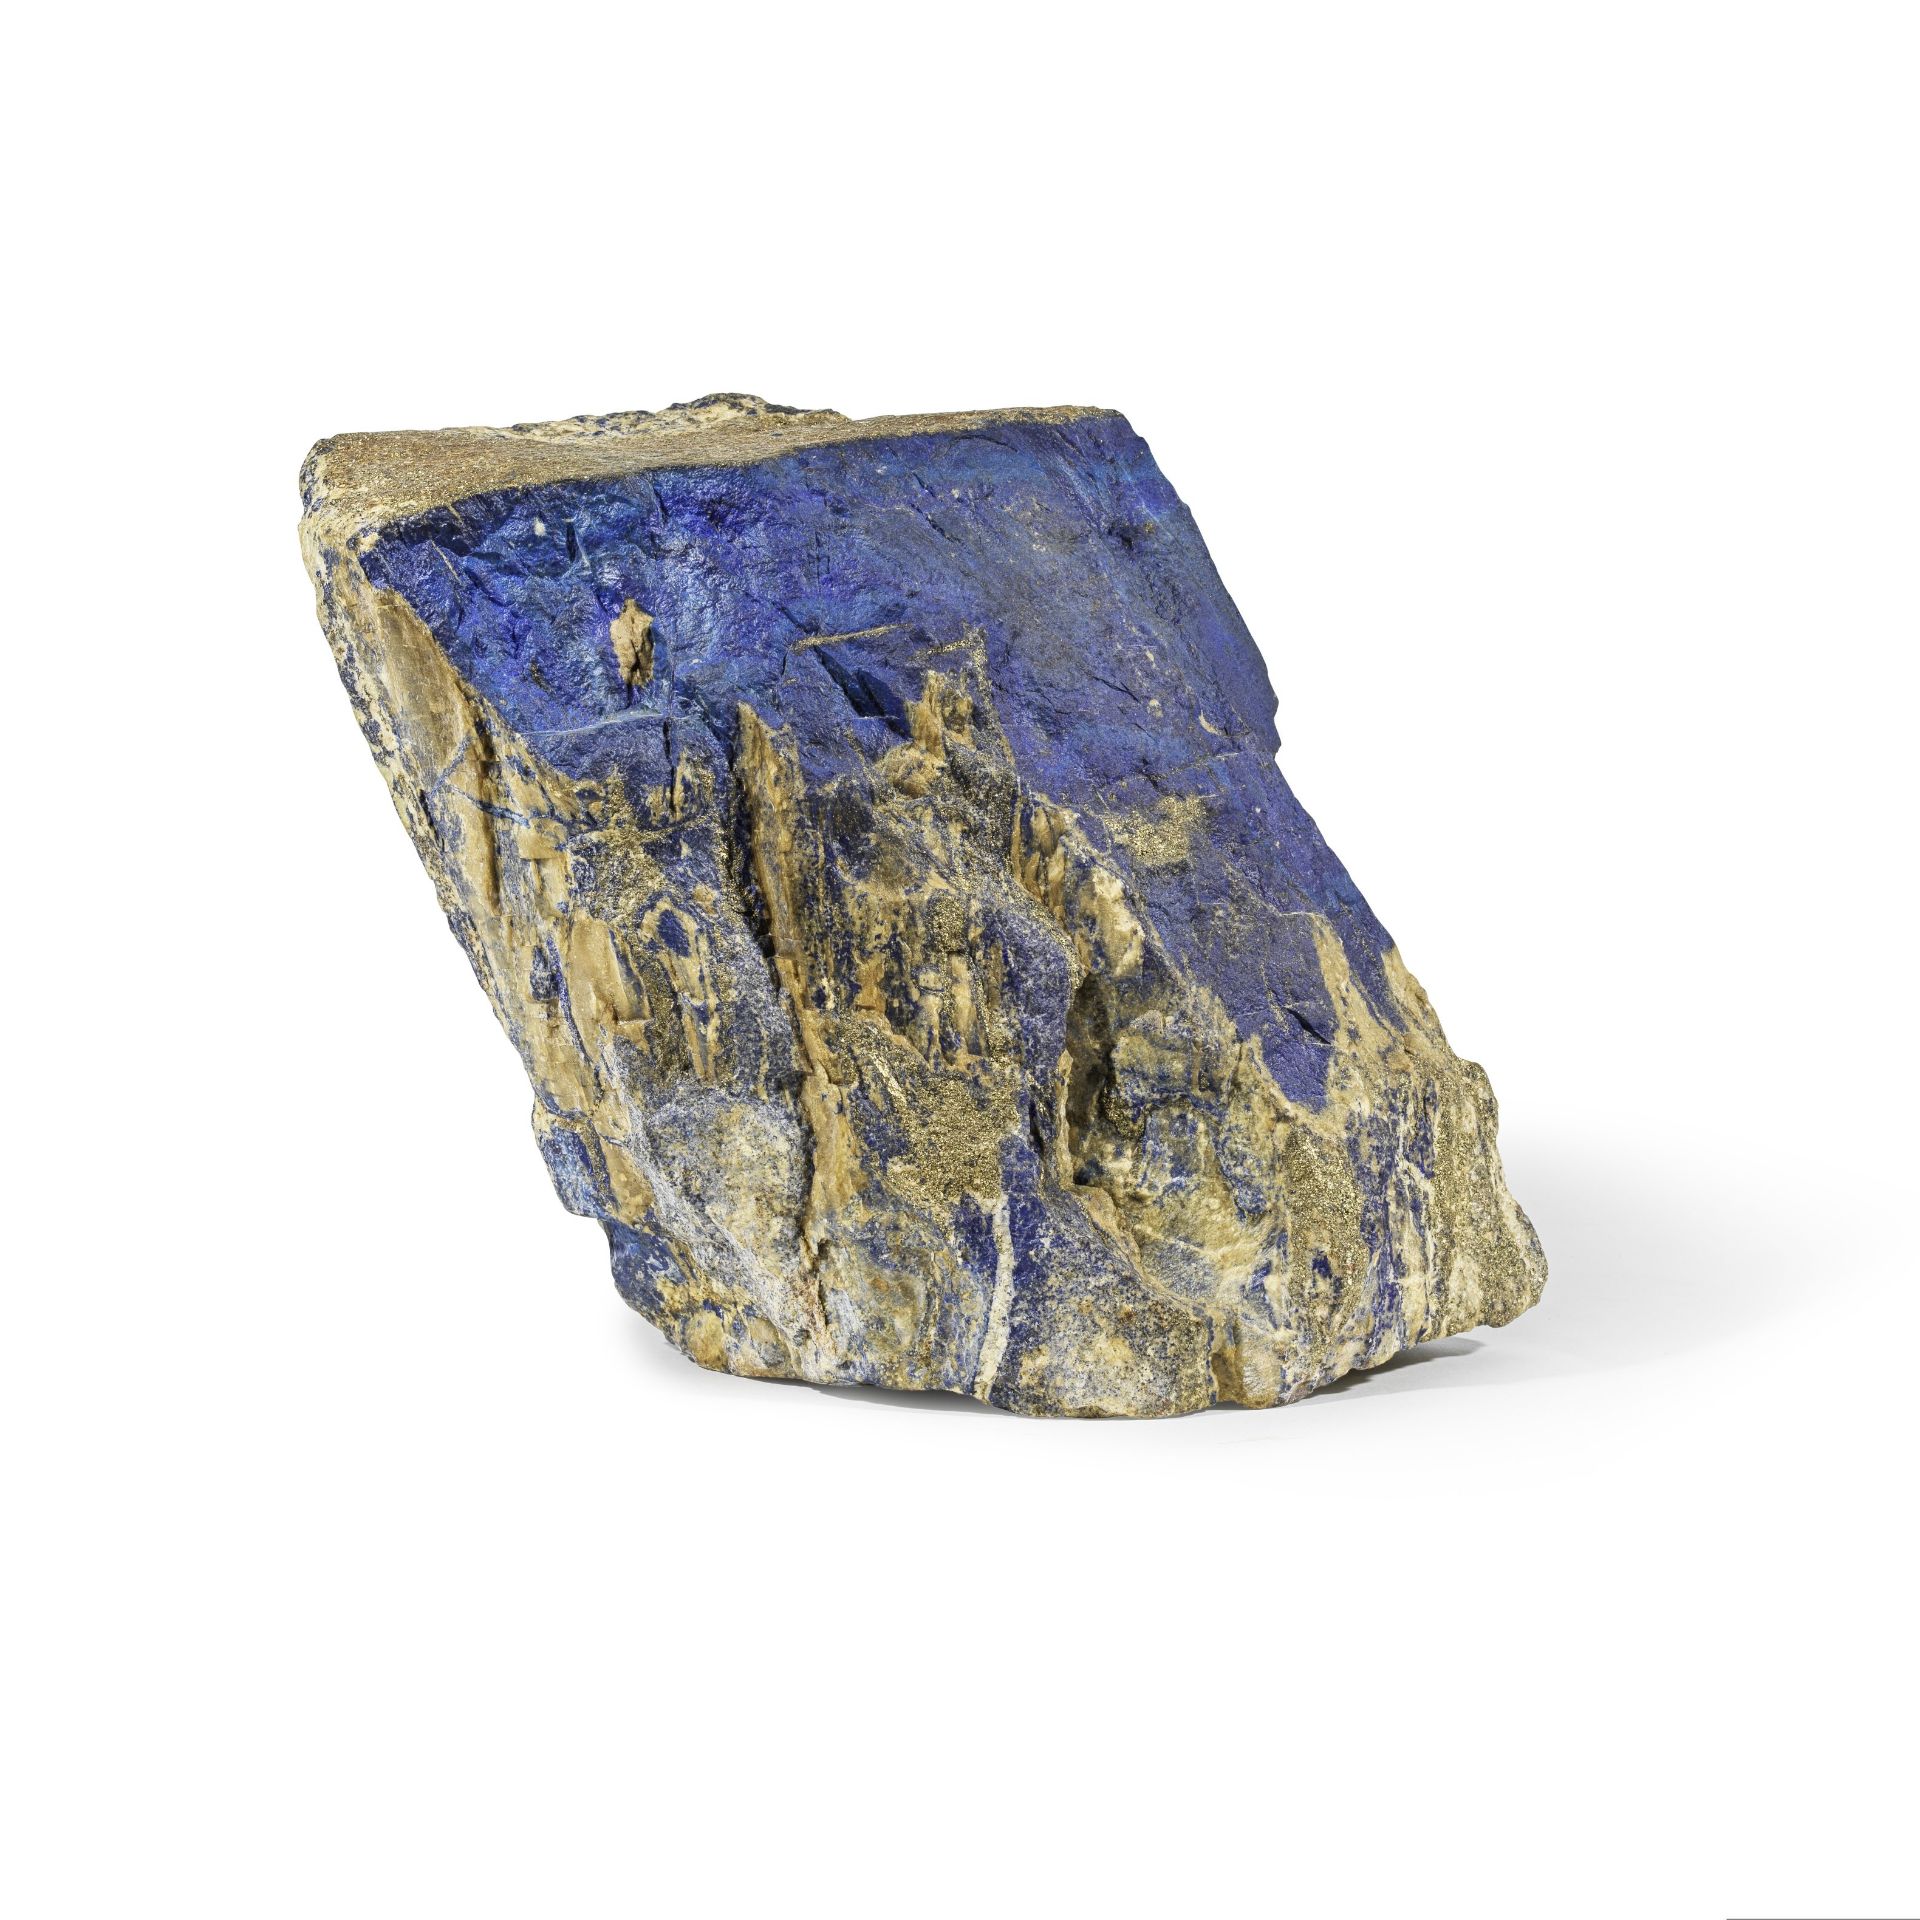 Bloc de Lapis lazuli non poliAn unpolished Lapis lazuli rock